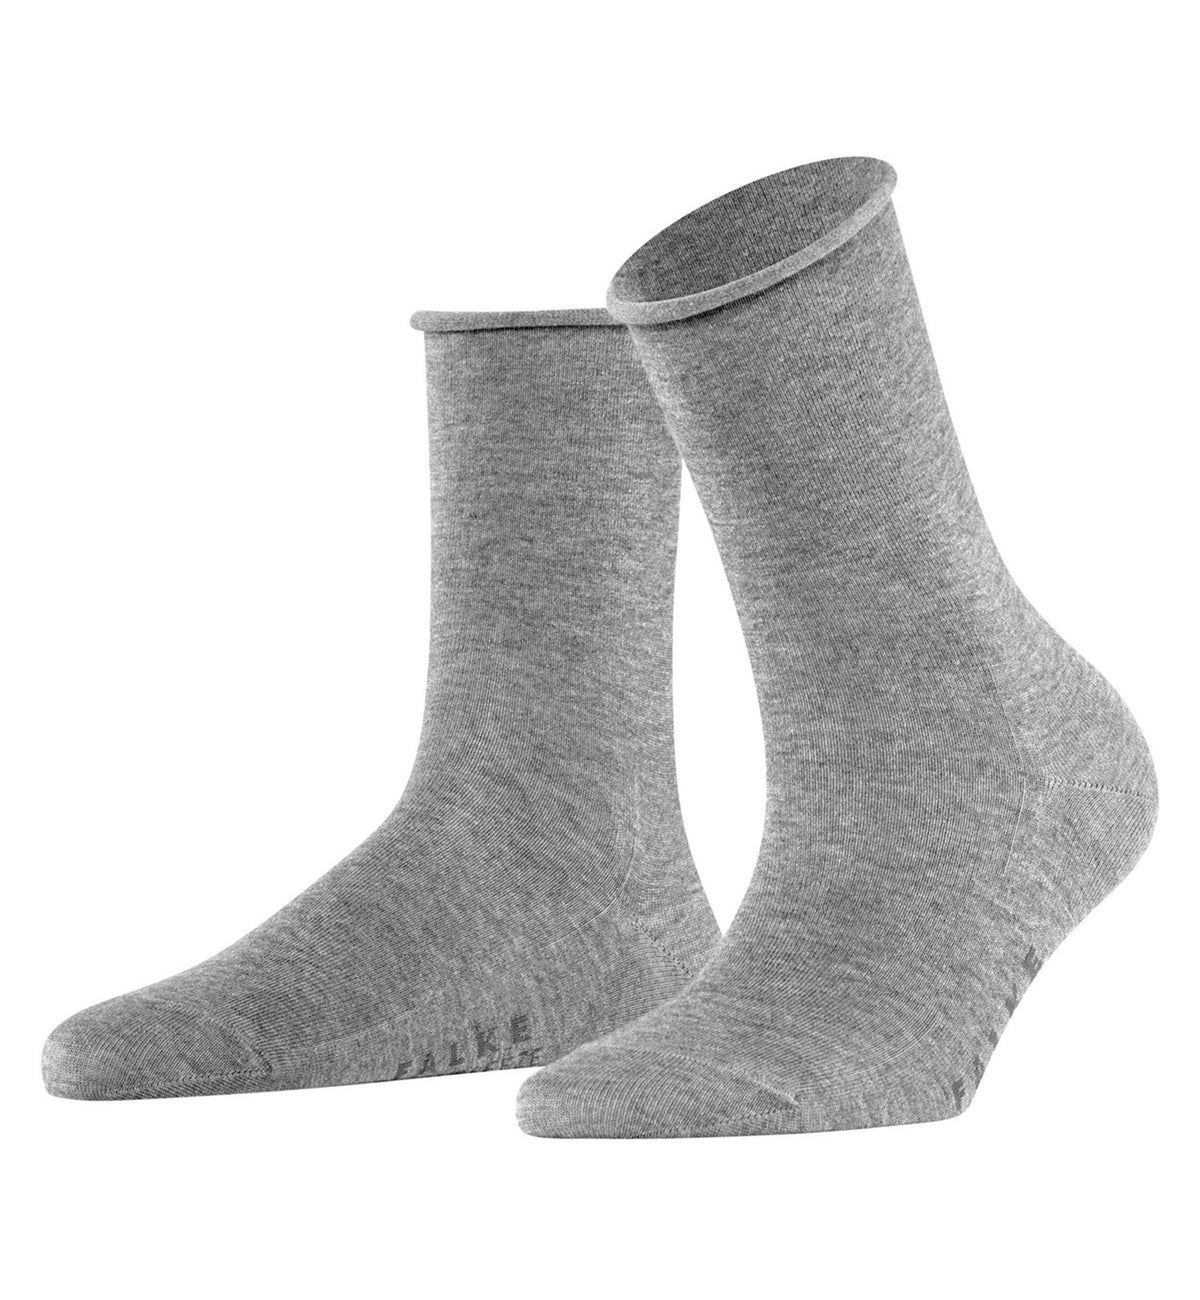 FALKE Active Breeze Crew Socks (46189),5/7.5,Light Grey - Light Grey,5/7.5